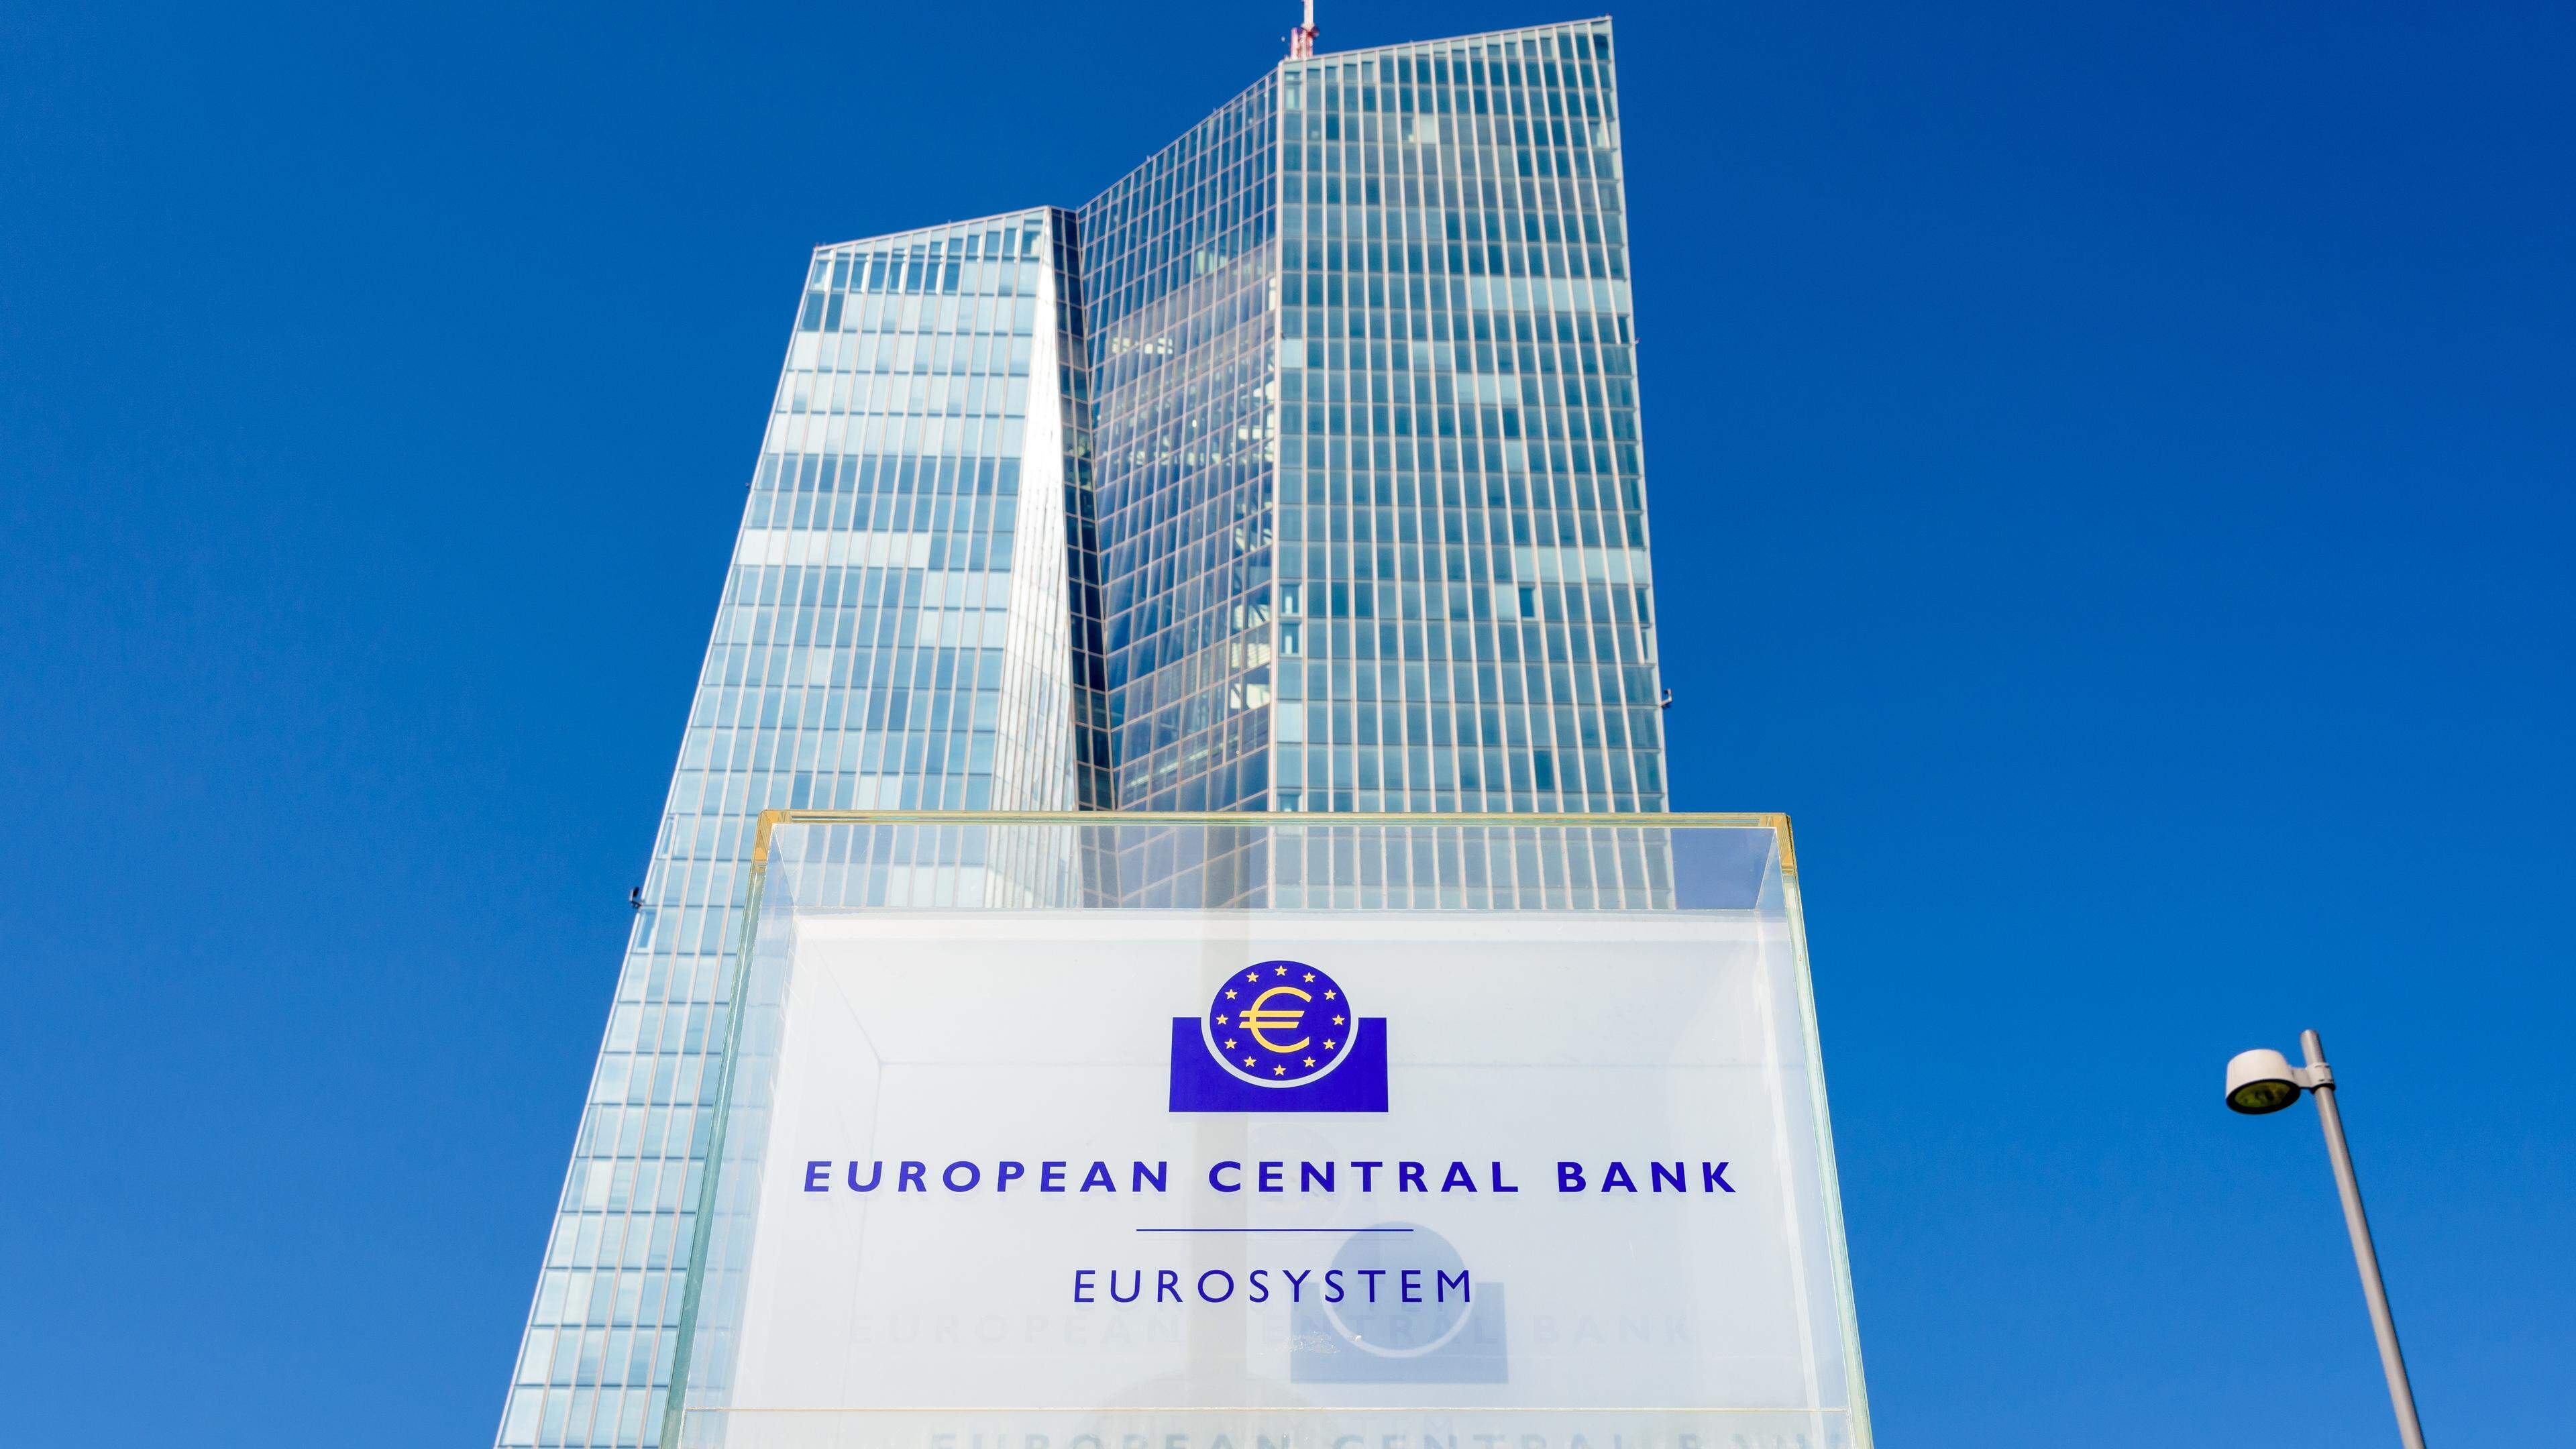 The ECB’s headquarters in Frankfurt